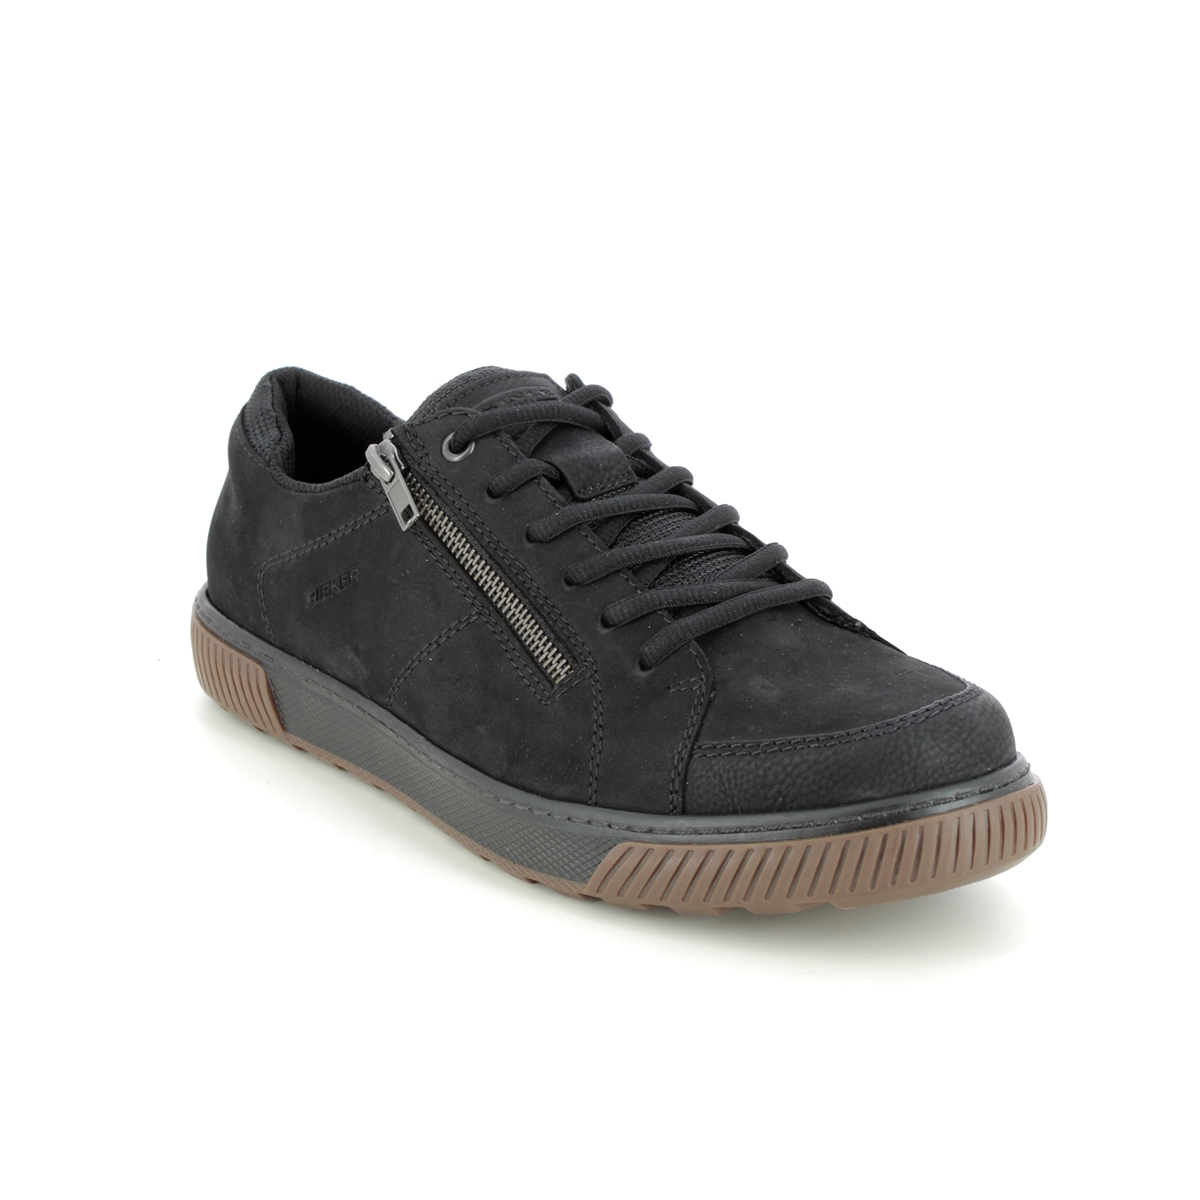 Rieker Urbanzi Black Suede Mens Comfort Shoes 18910-00 In Size 42 In Plain Black Suede